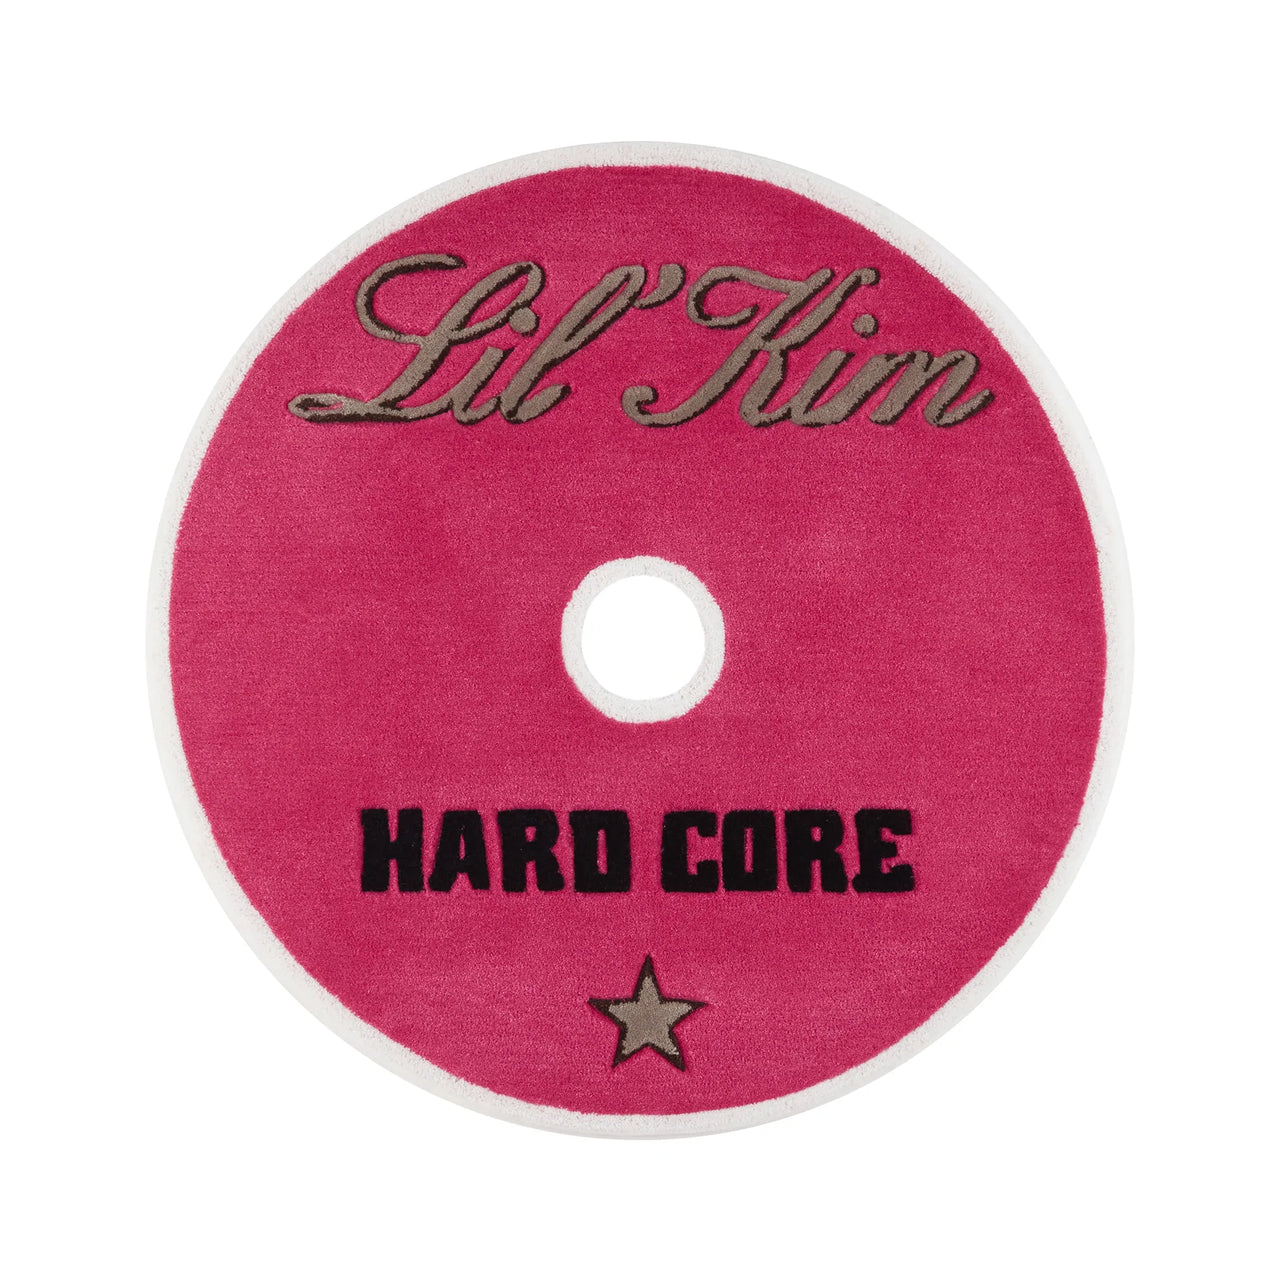 Curves Lil Kim Hardcore CD Rug